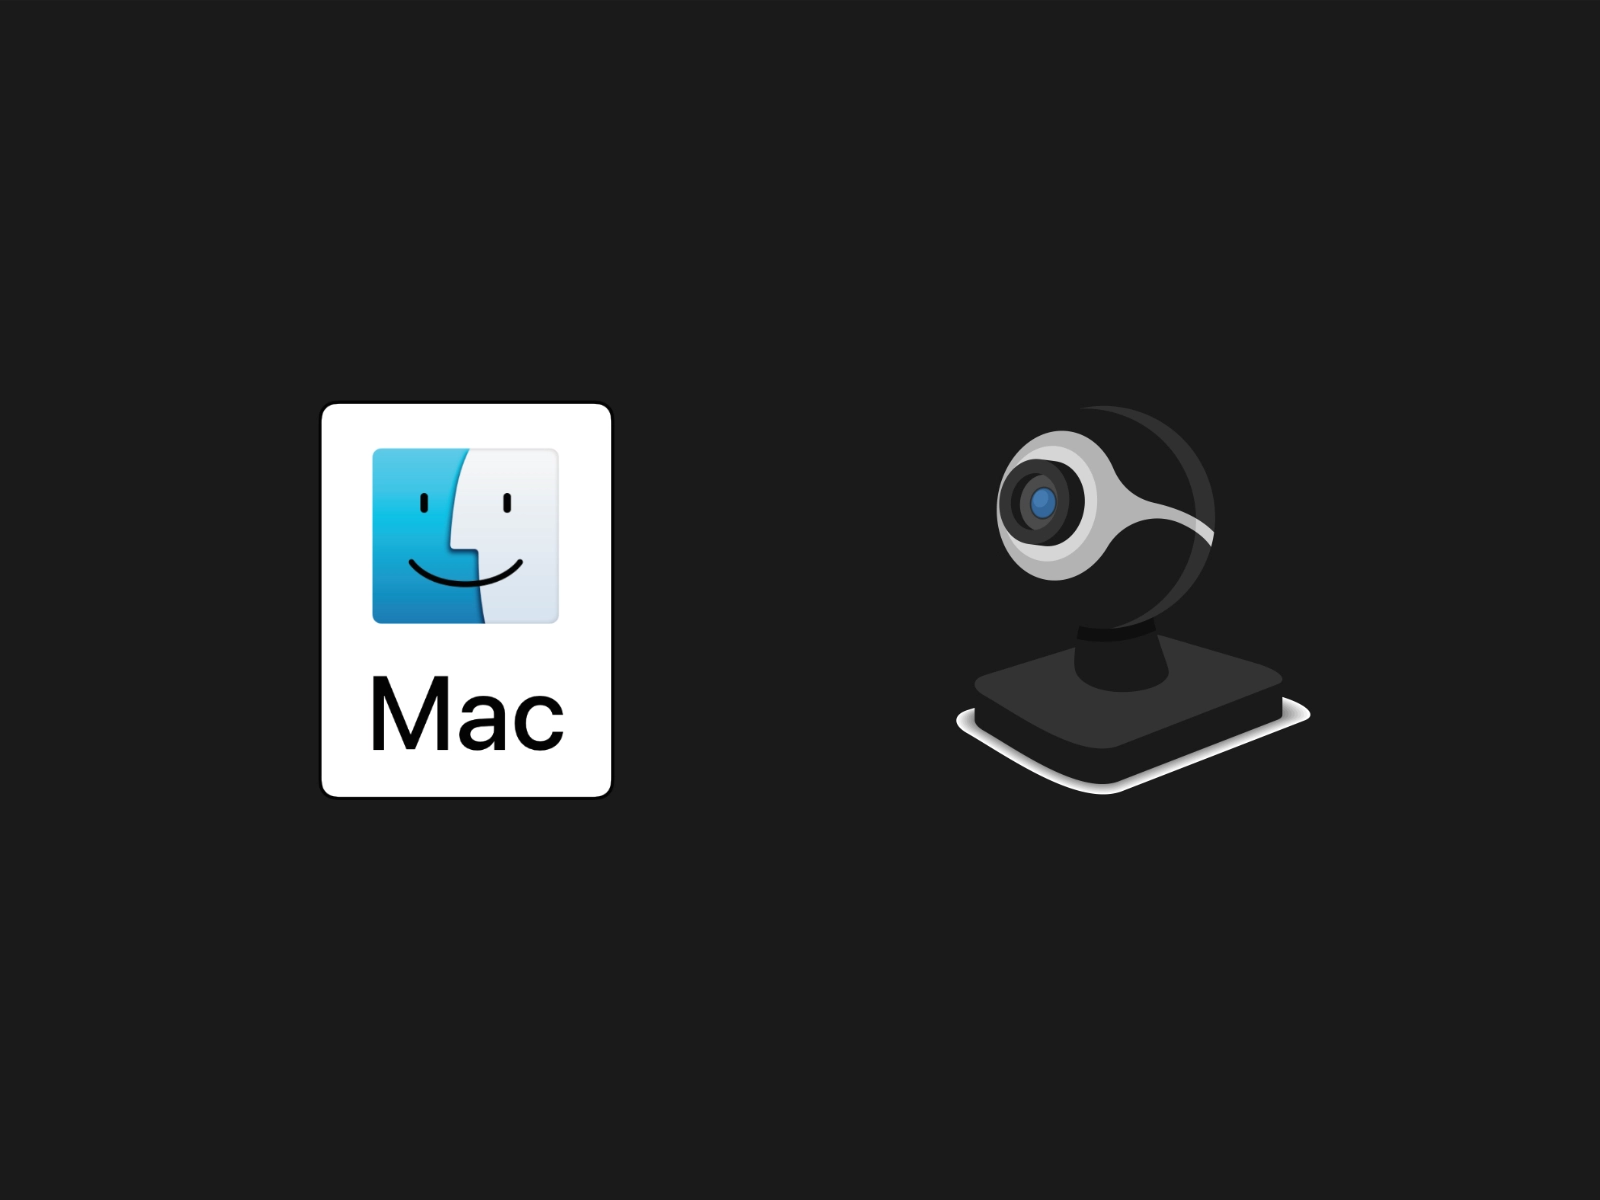 Mac logo and illustration of a webcam